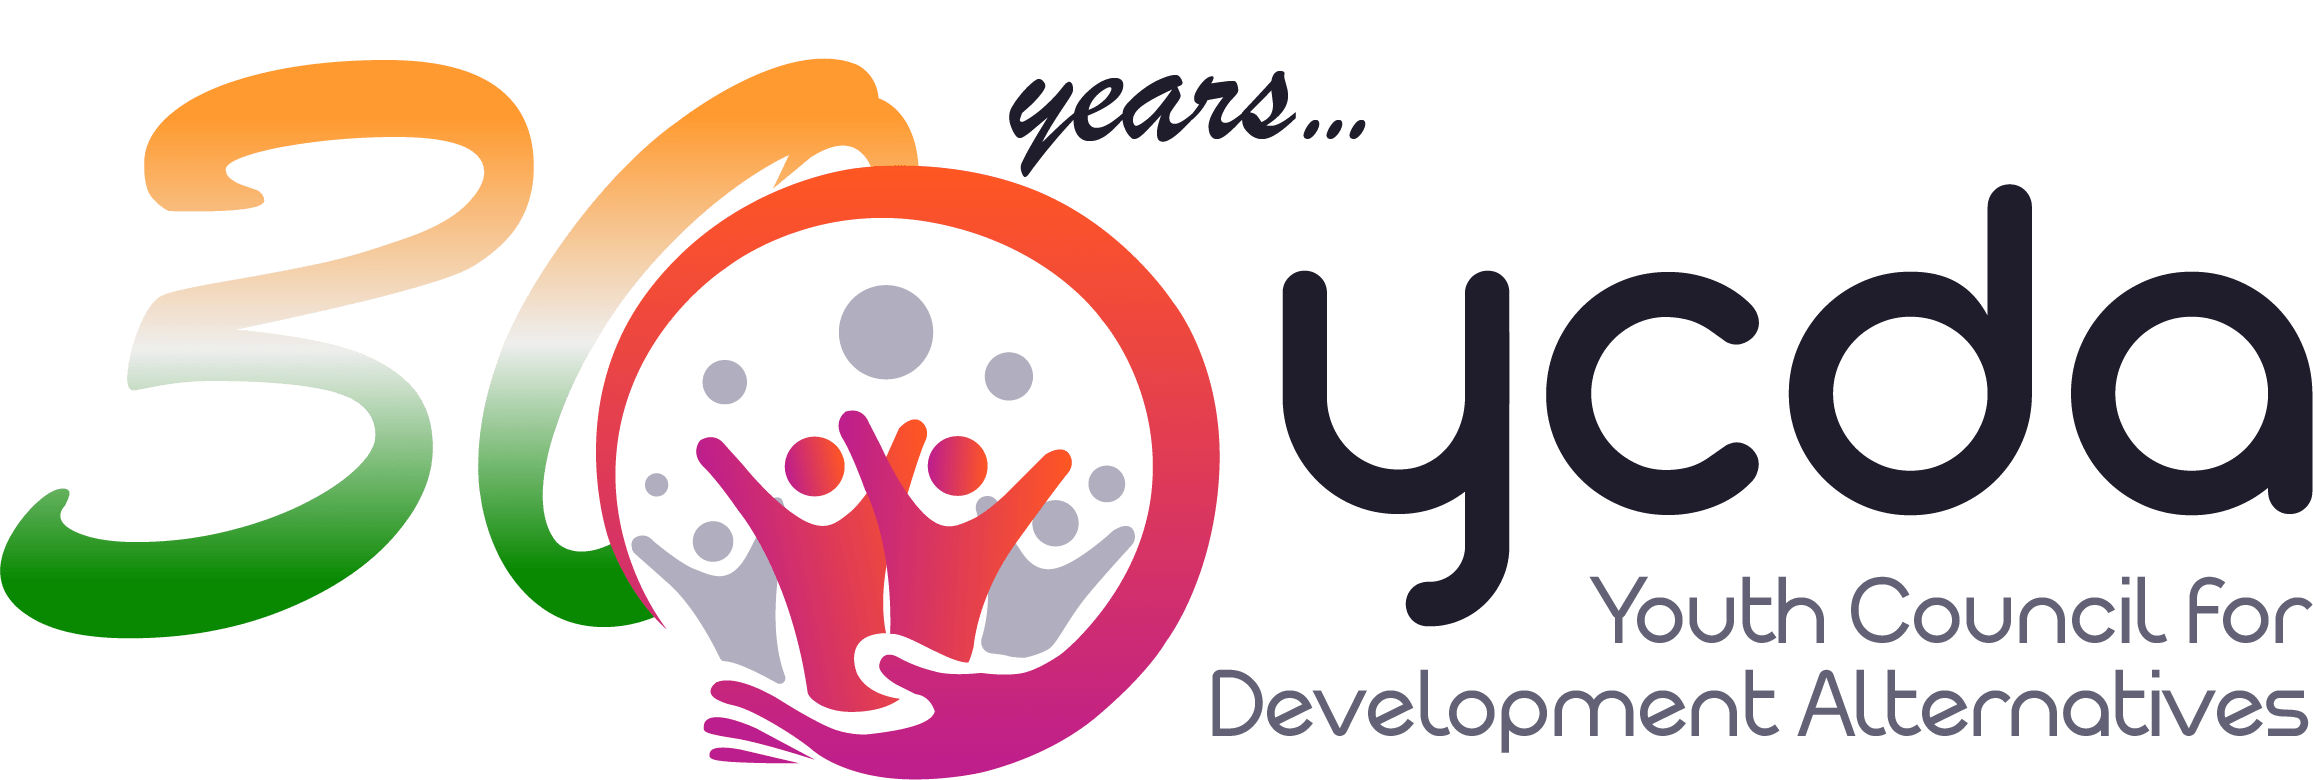 Youth Council for Development Alternatives (YCDA)